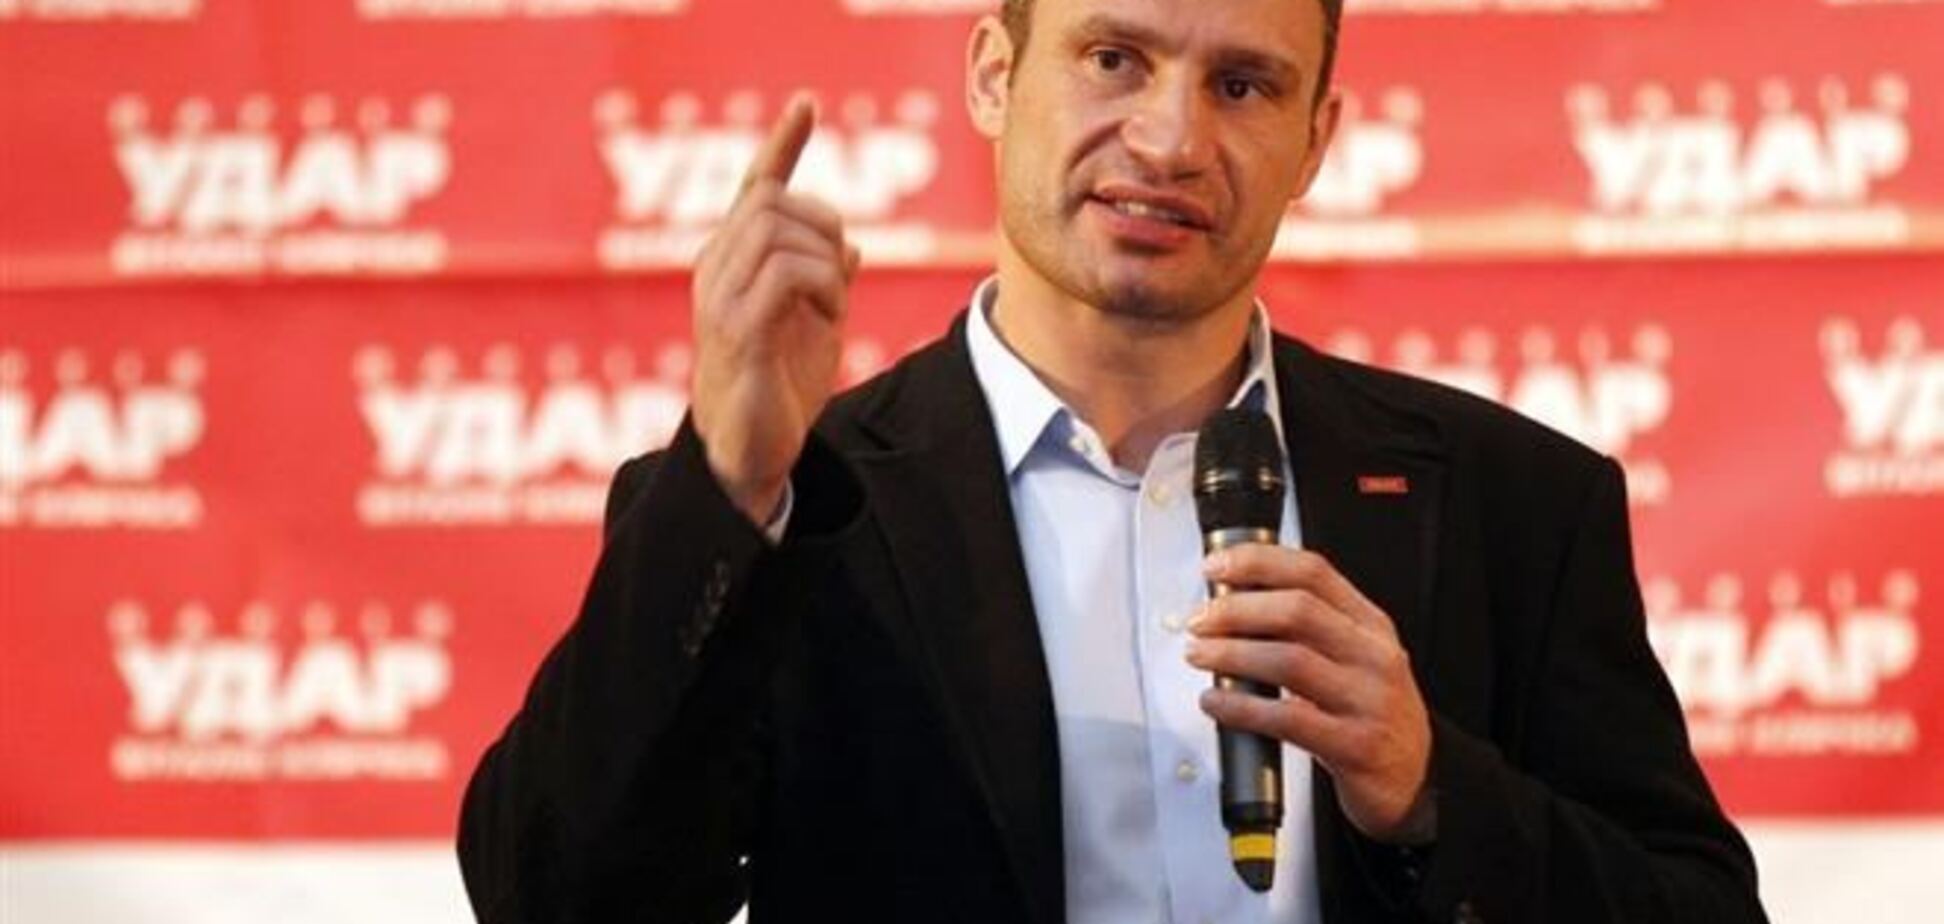 В УДАРе прояснили ситуацию с резидентством и возможным президентством Кличко